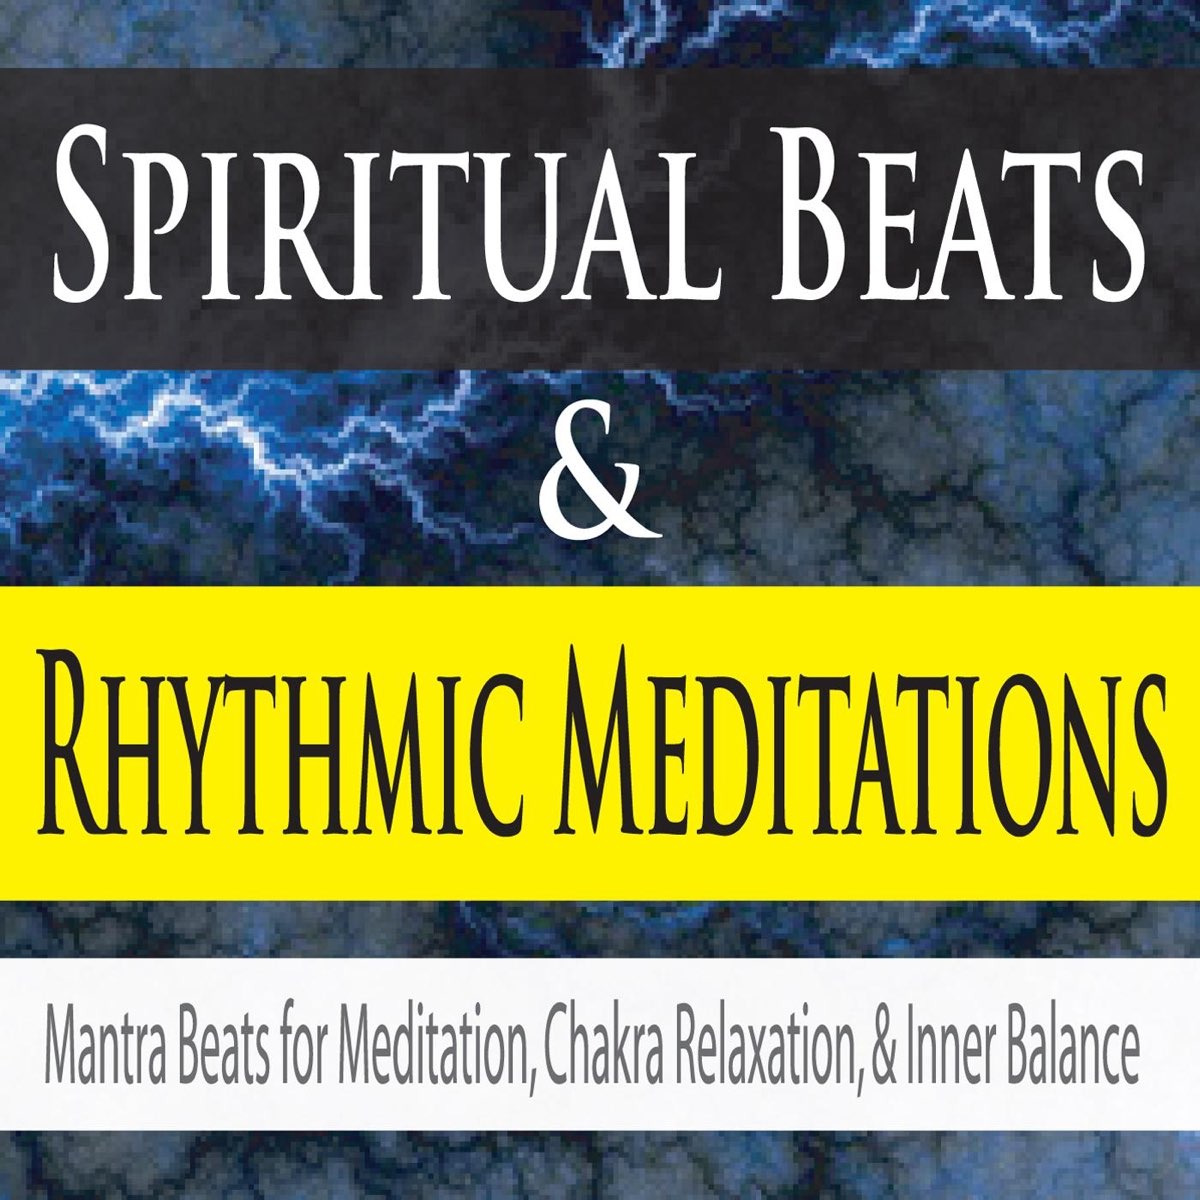 Spiritual Beats & Rhythmic Meditations: Mantra Beats for Meditation, Chakra  Relaxation, and Inner Balance - Album by Steven Current - Apple Music